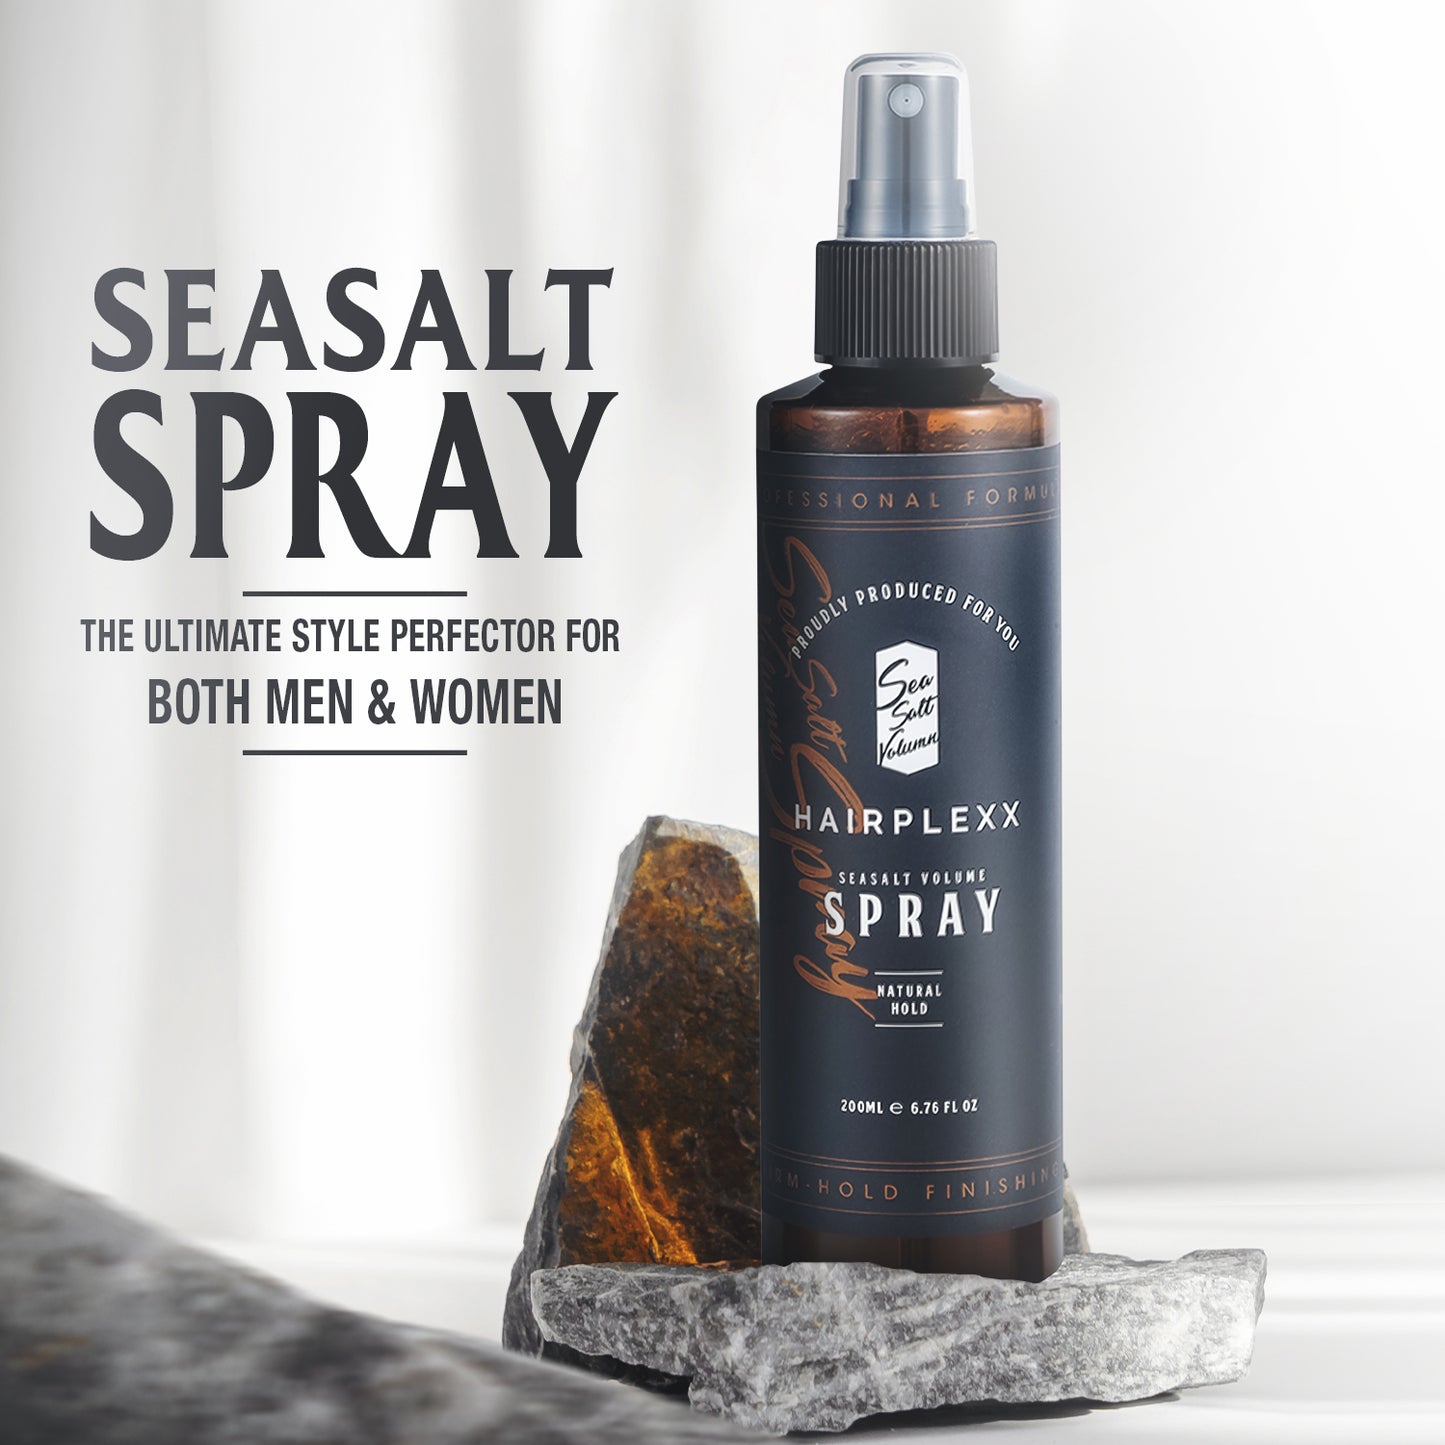 Hairplexx Sea Salt Volume Hair Spray for both Men and Women 6.76 fl oz